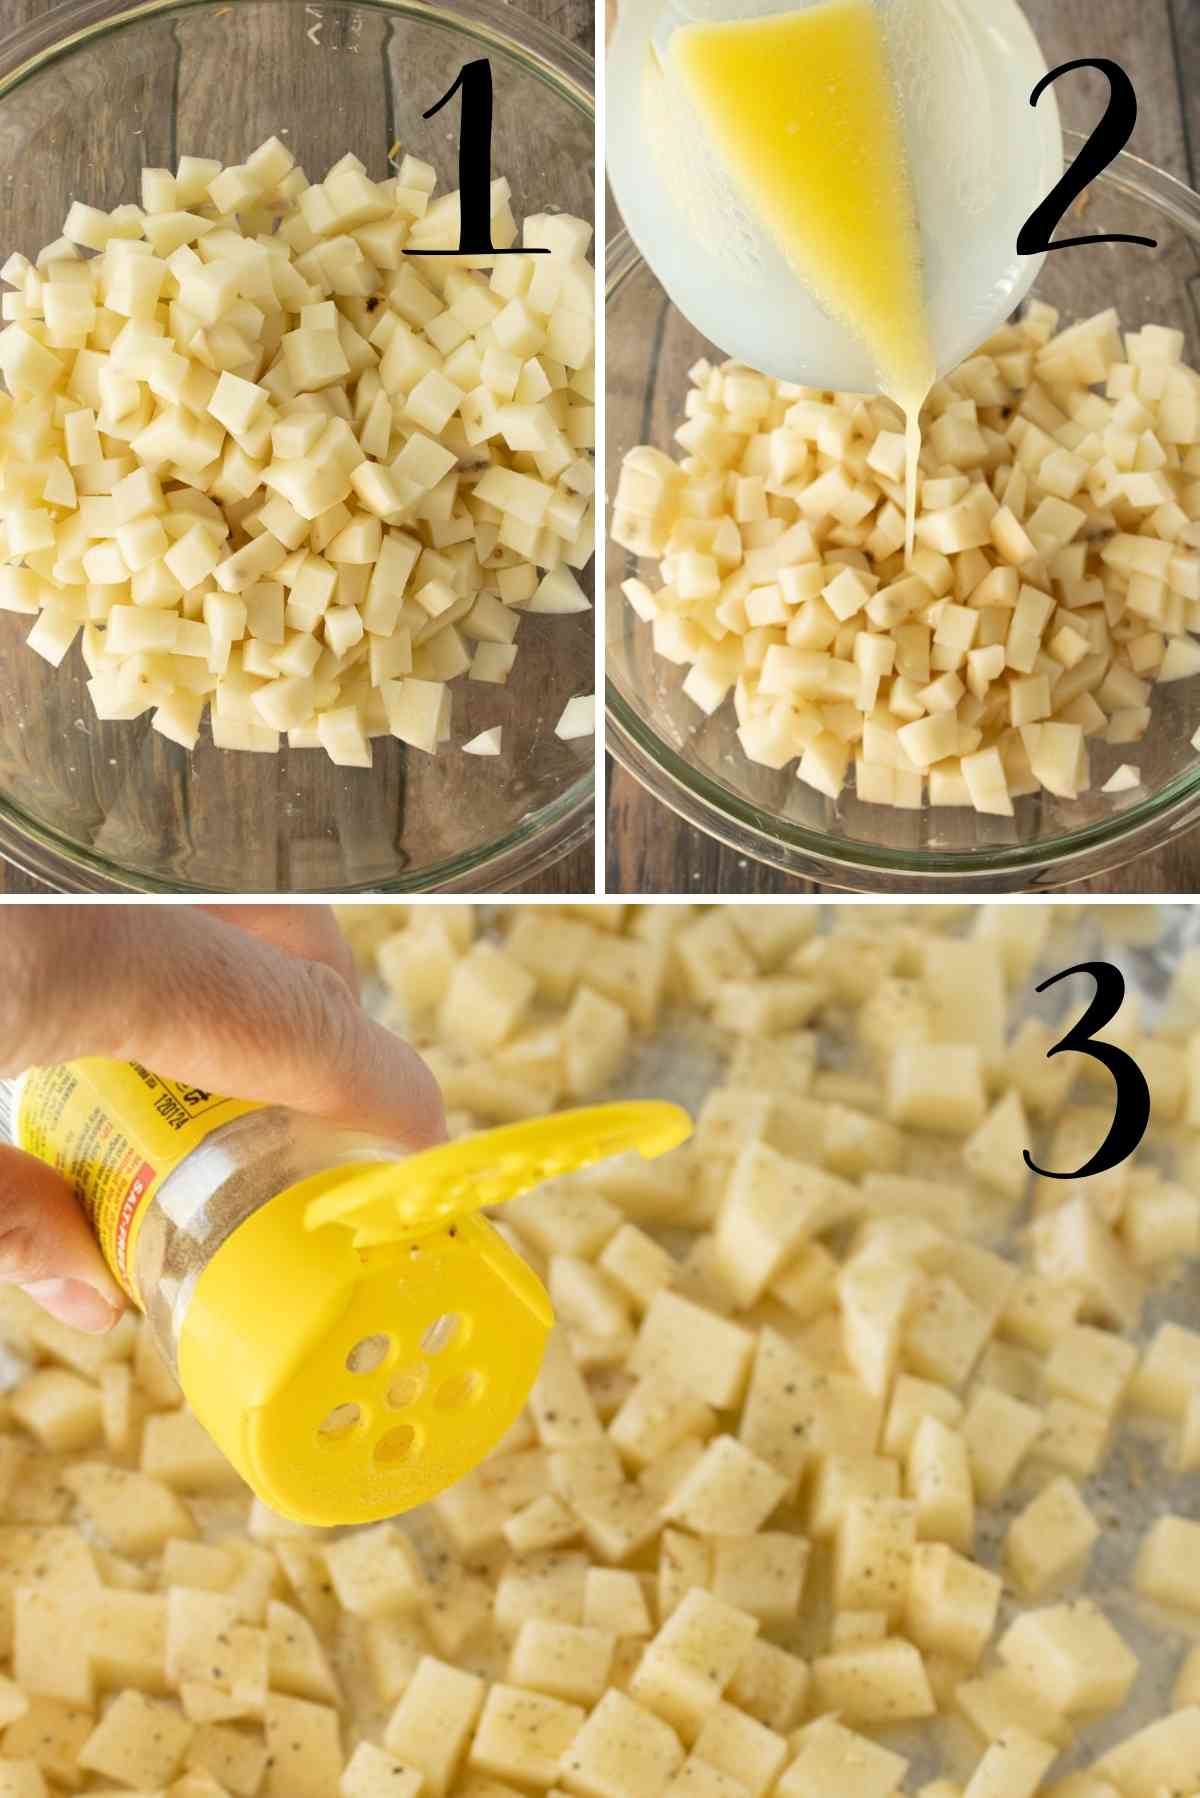 Seasoning of buttered potato cubes.